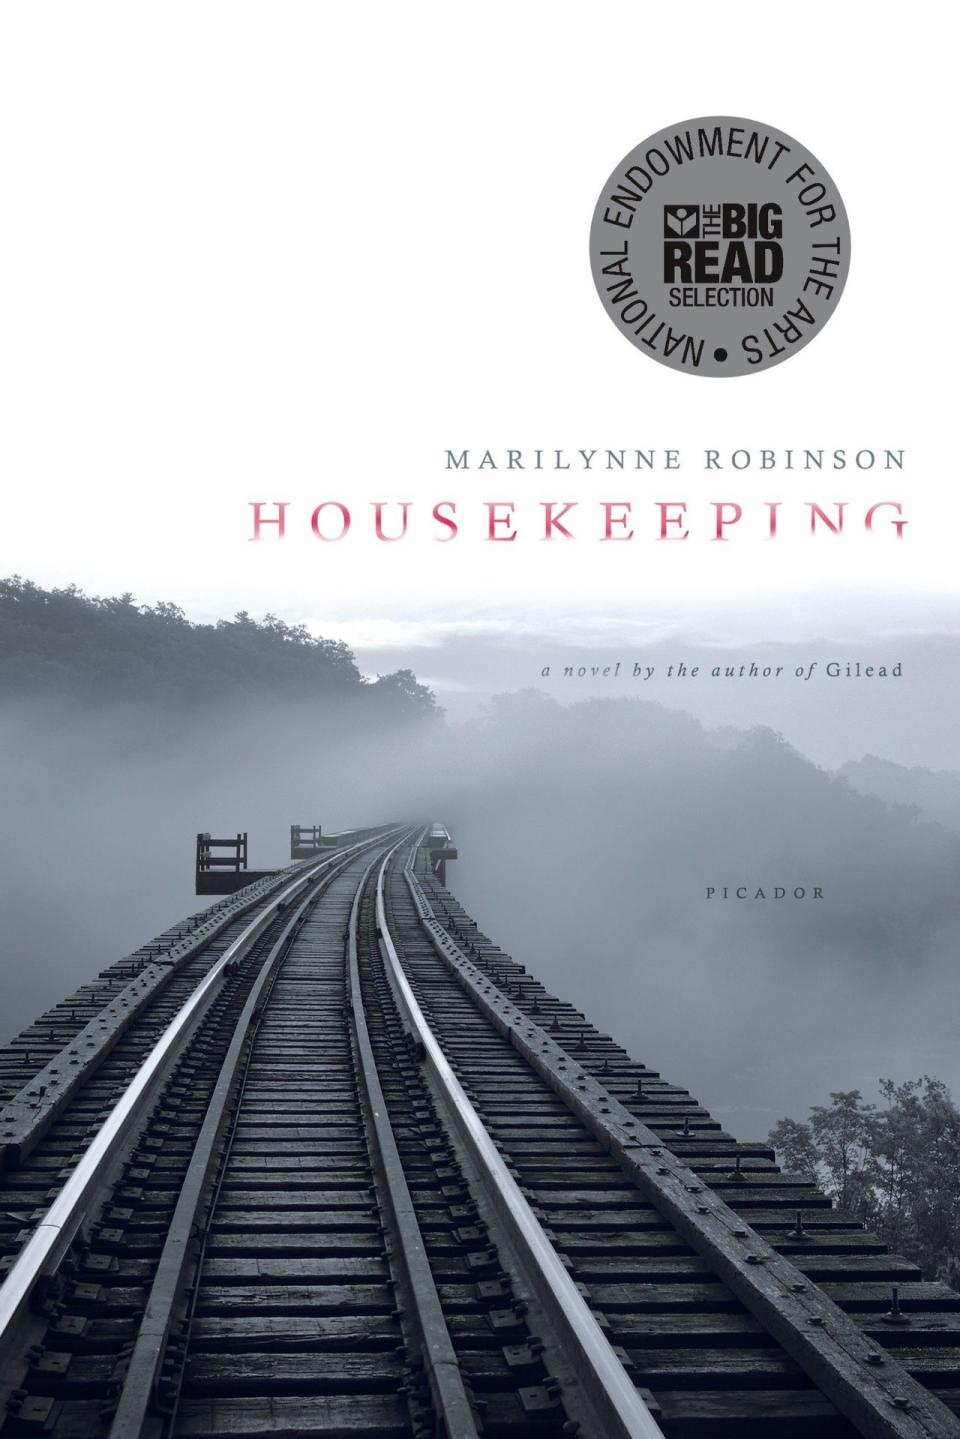 Housekeeping, by Marilynne Robinson